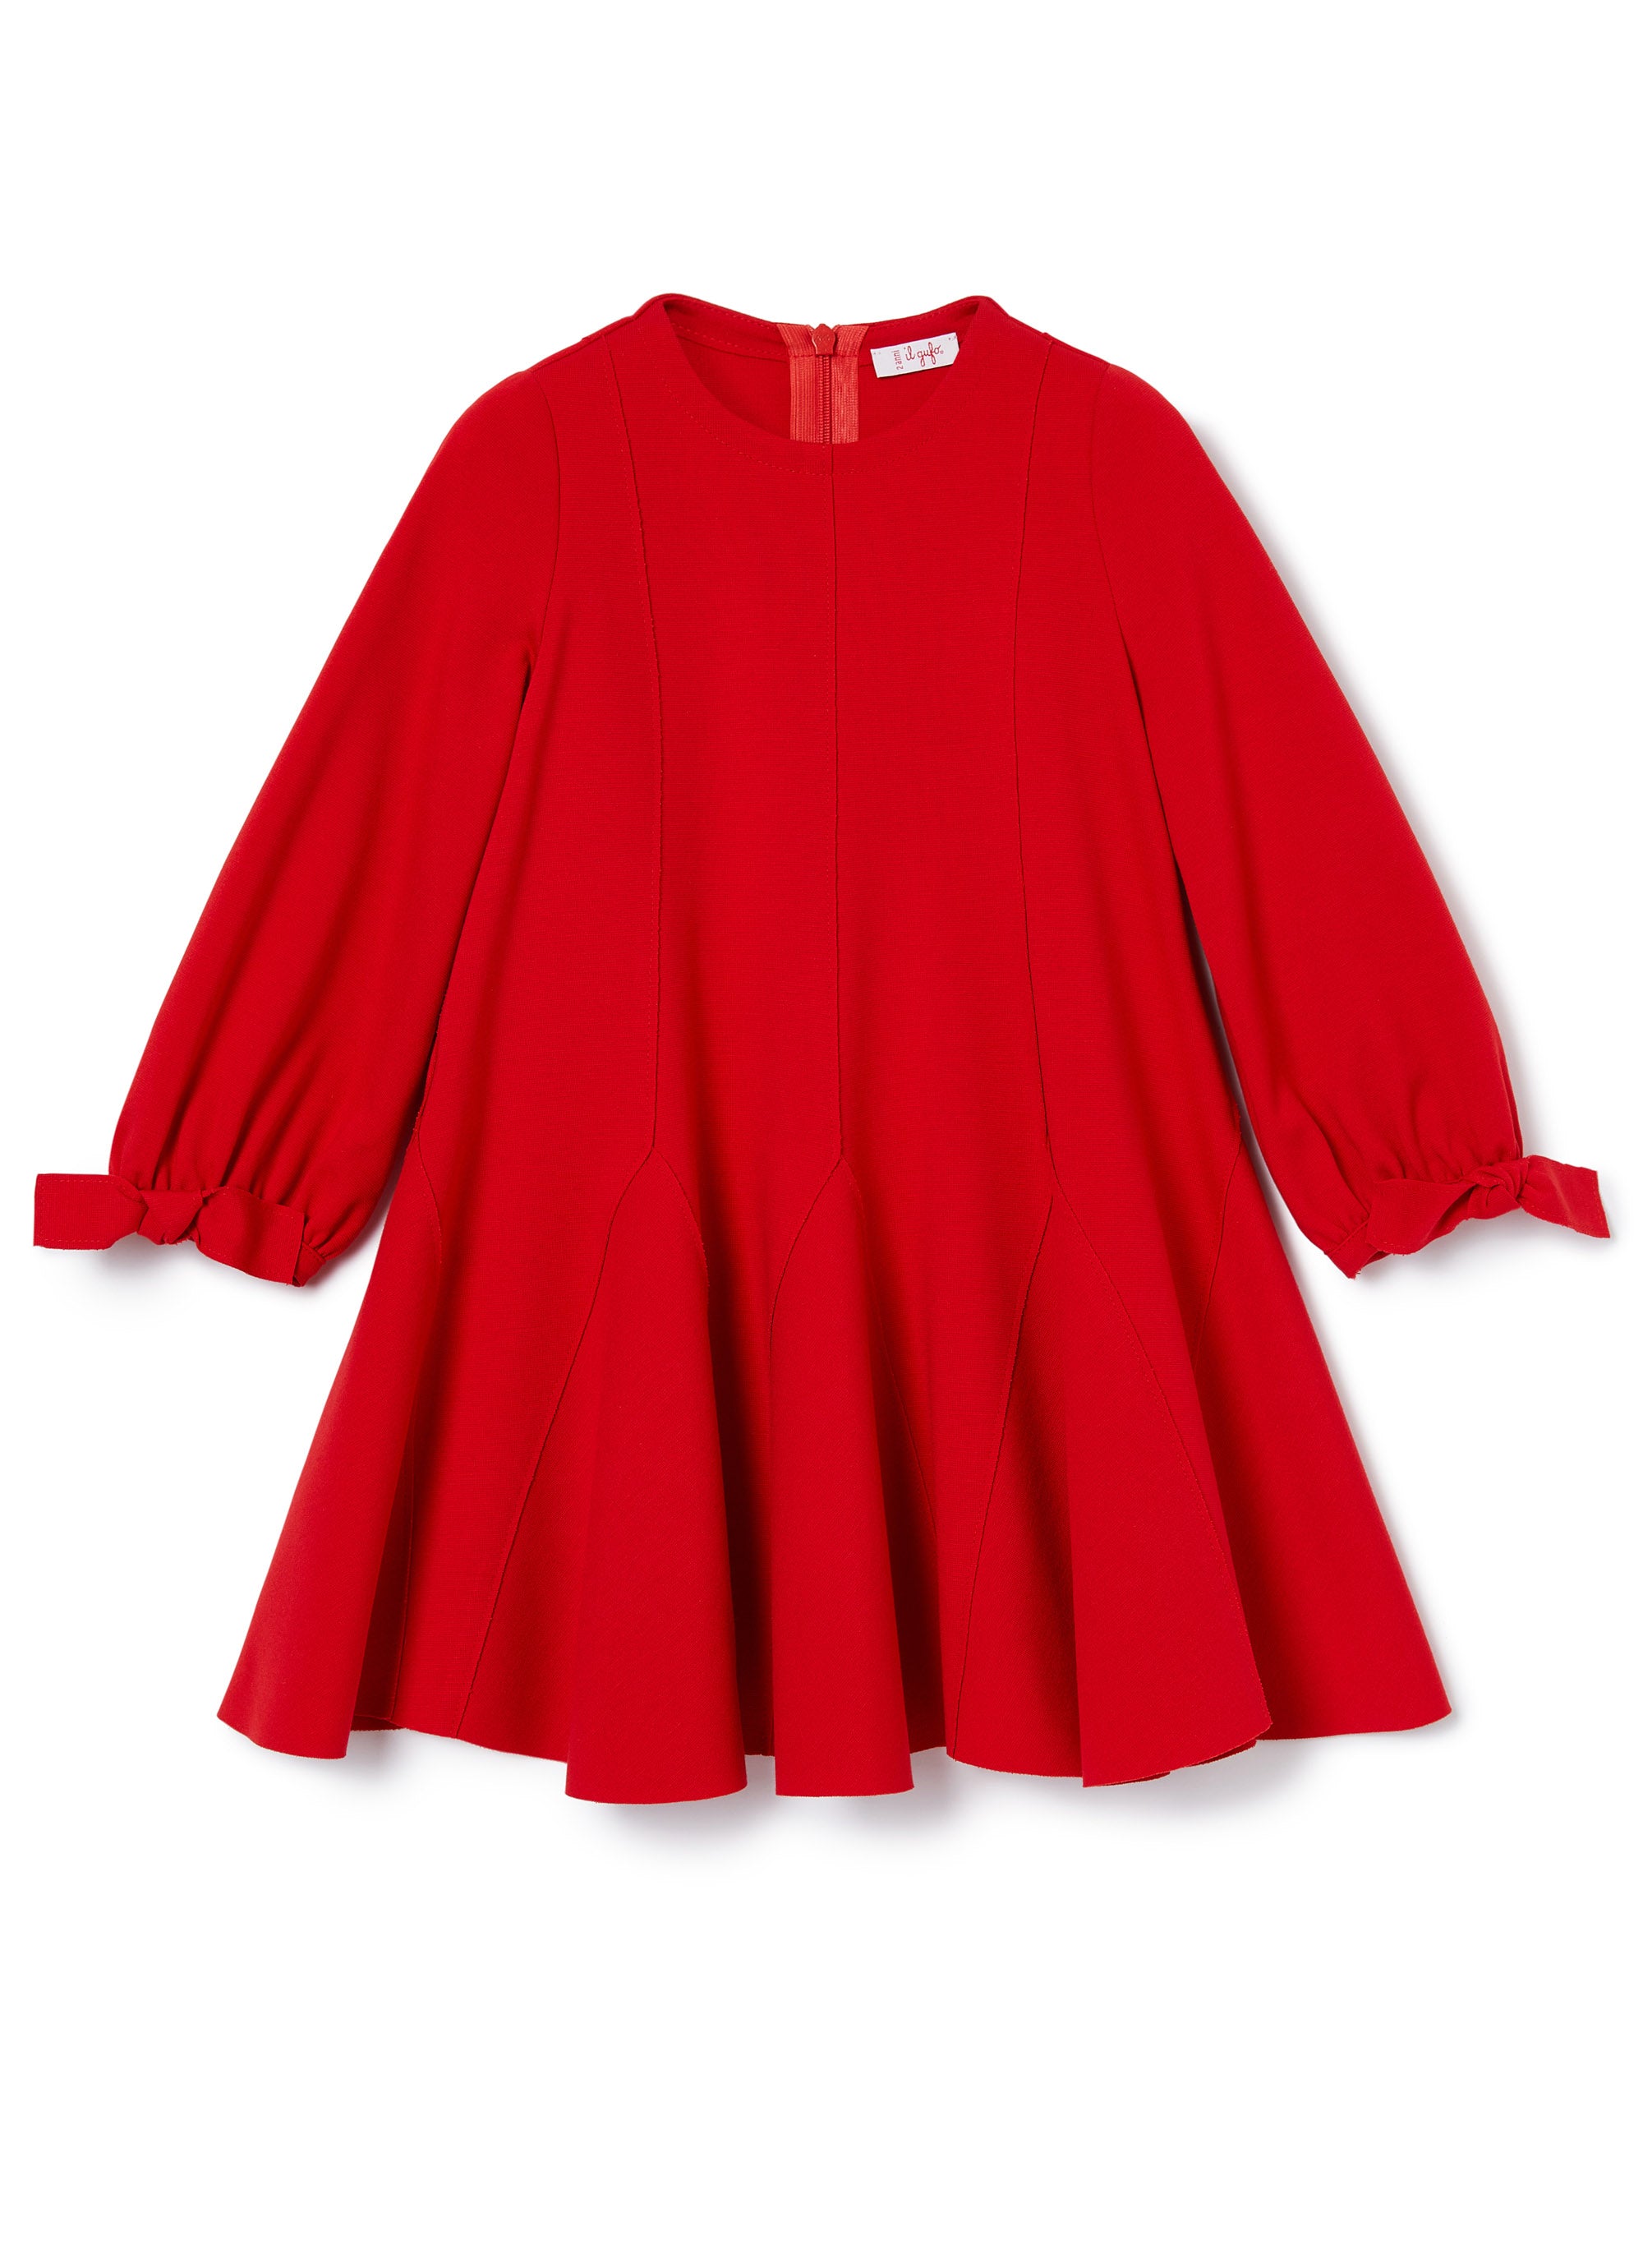 Girls Red Carnation Dress